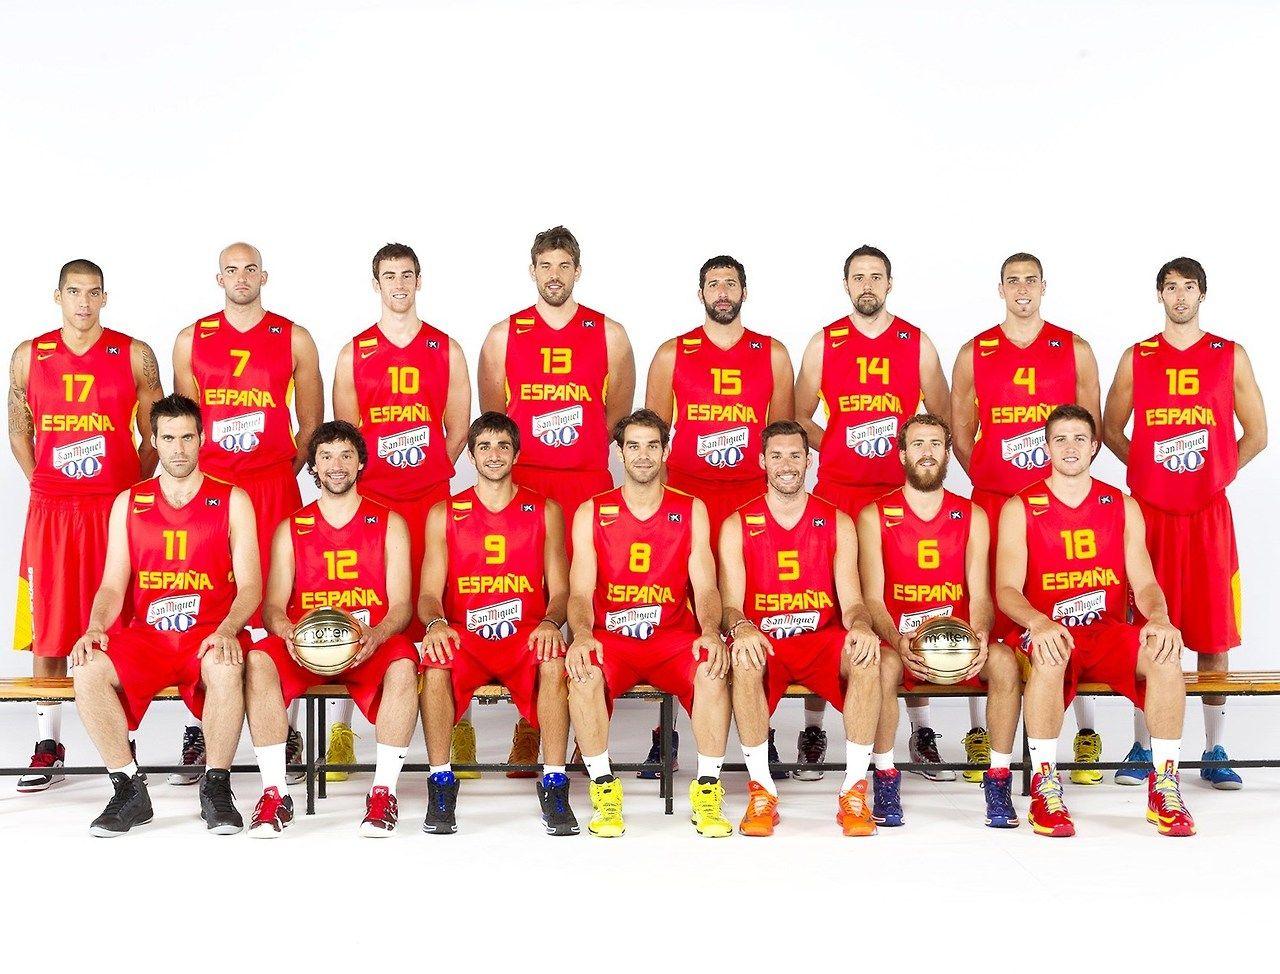 f*ckyeahrudyfernandez: Spain national basketball team!